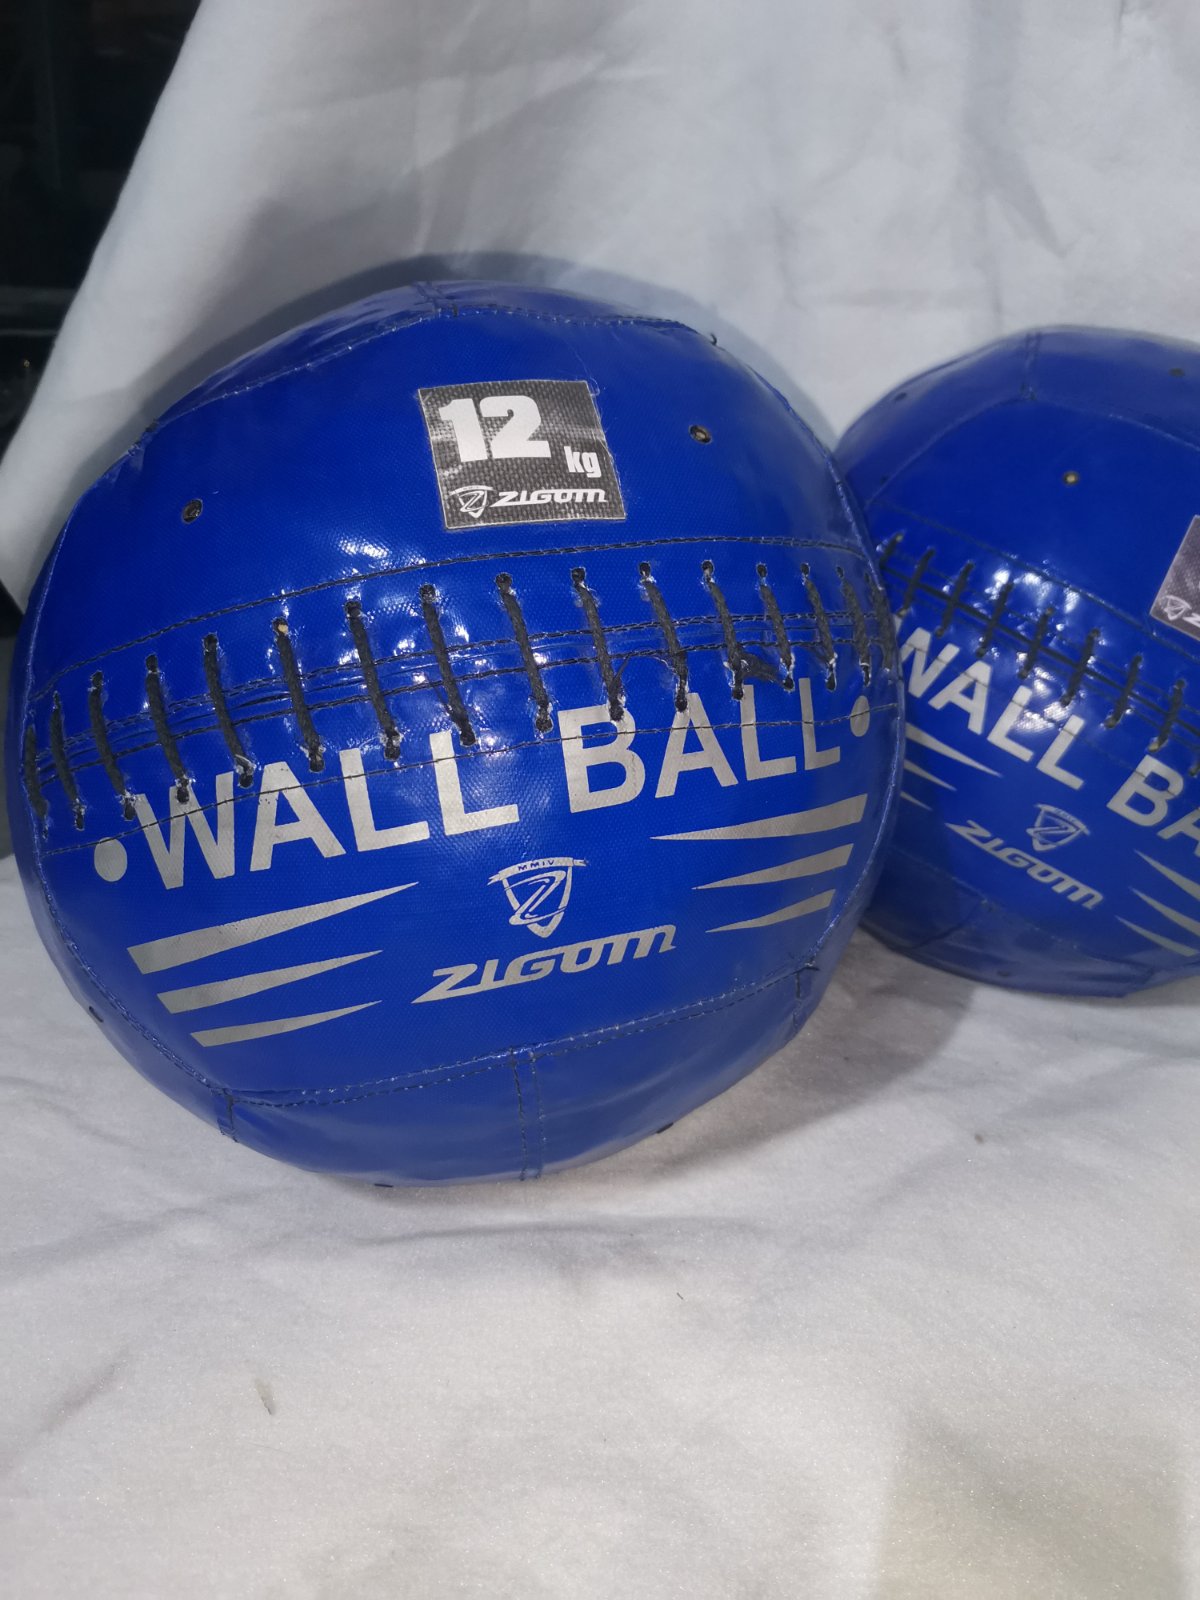 zigom-wall-ball-12-kg-1627985015124551064961091477d04ce.jpg